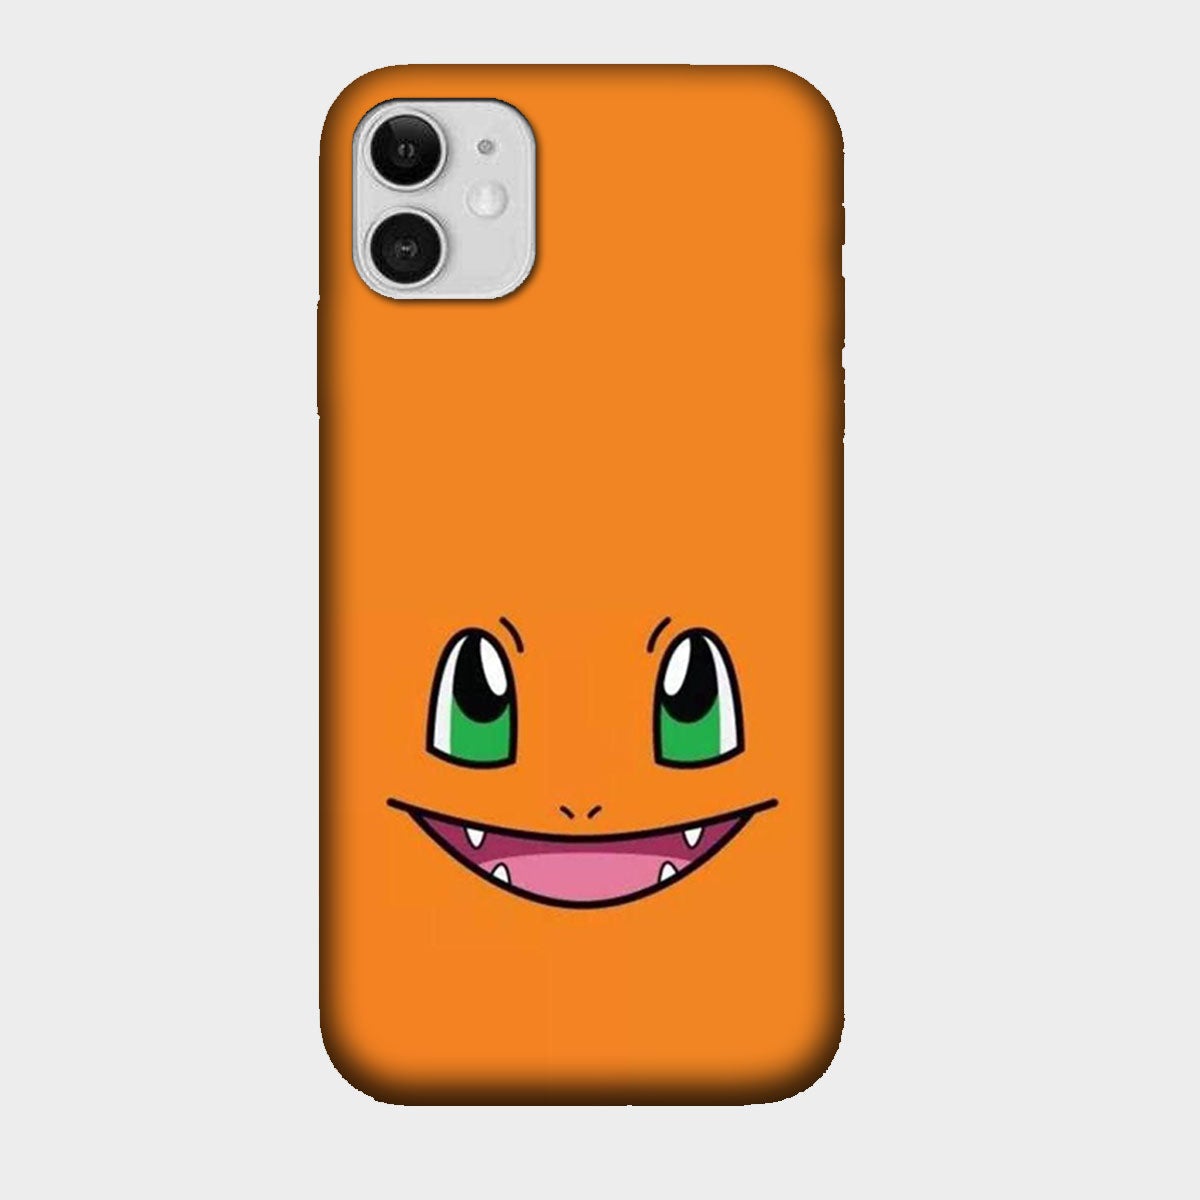 Charmander - Pokemon - Mobile Phone Cover - Hard Case